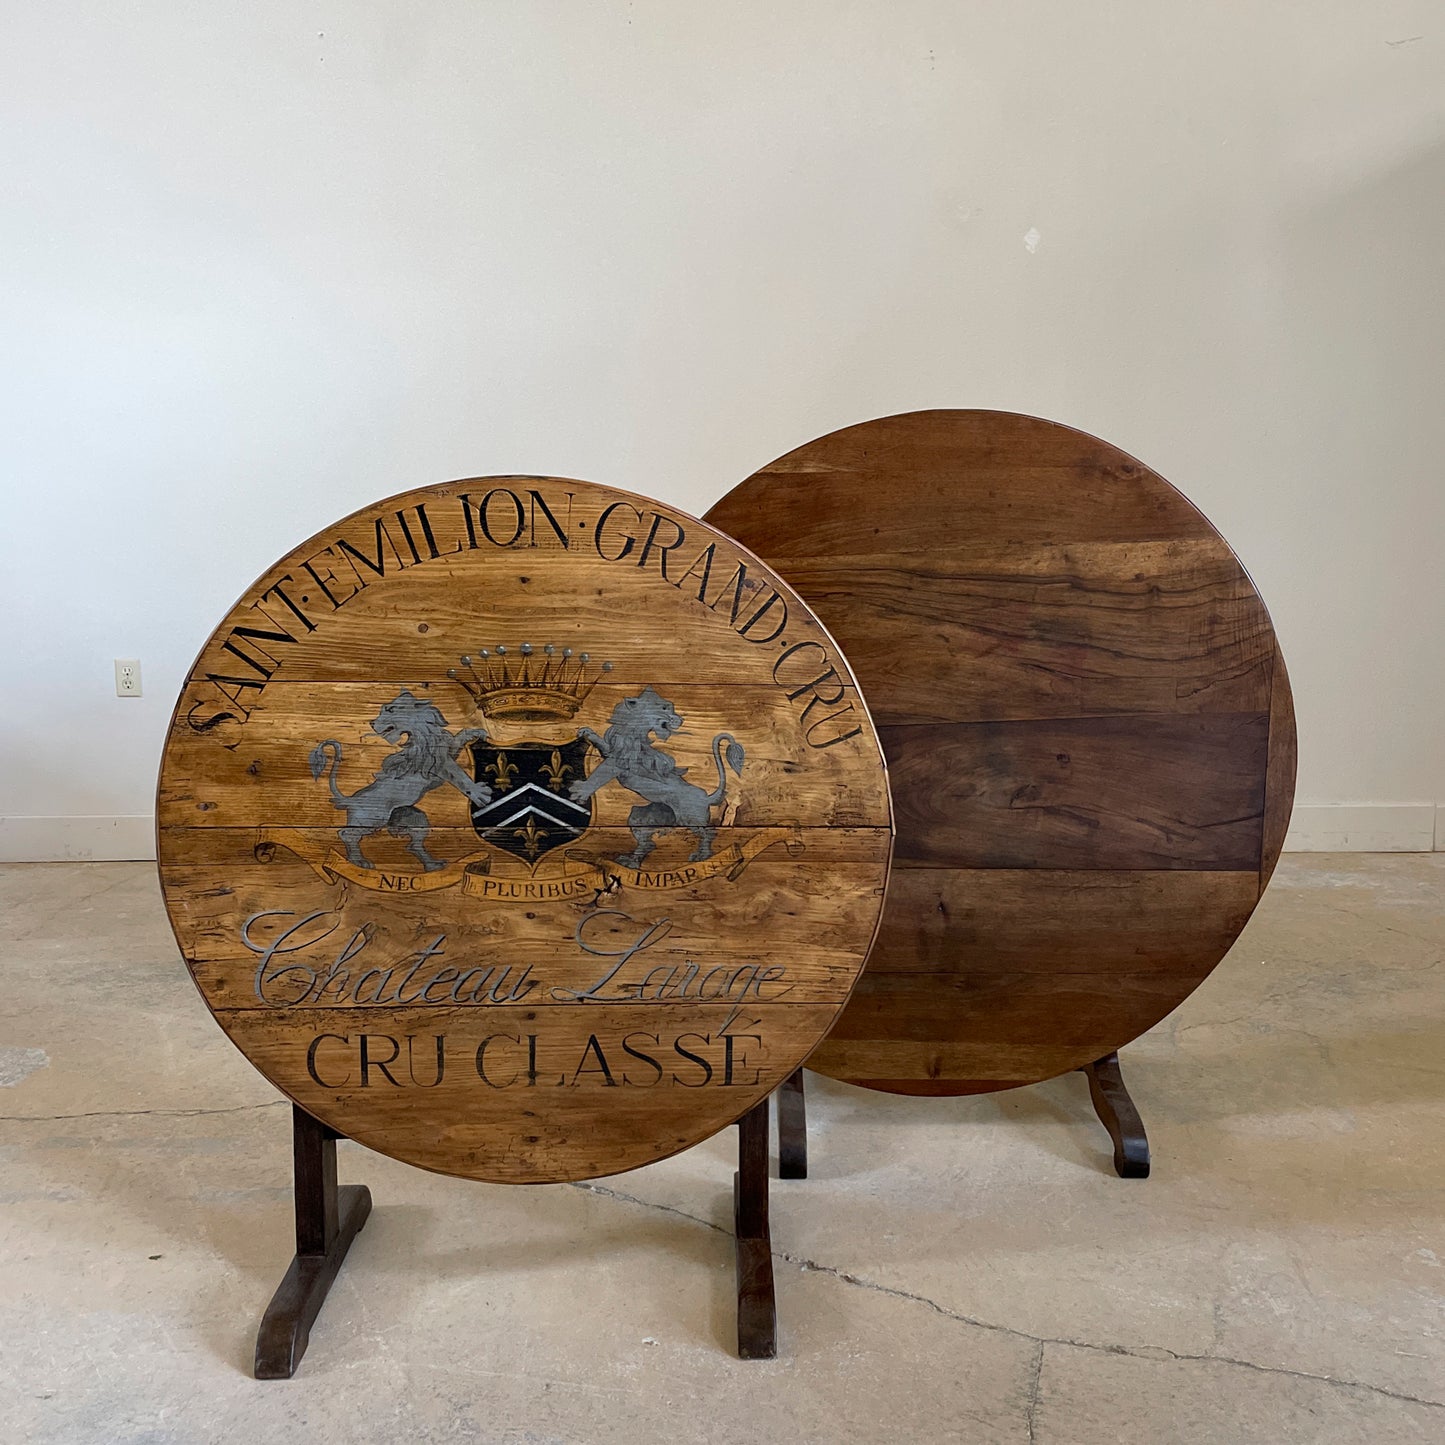 Antique French Walnut Vendage table